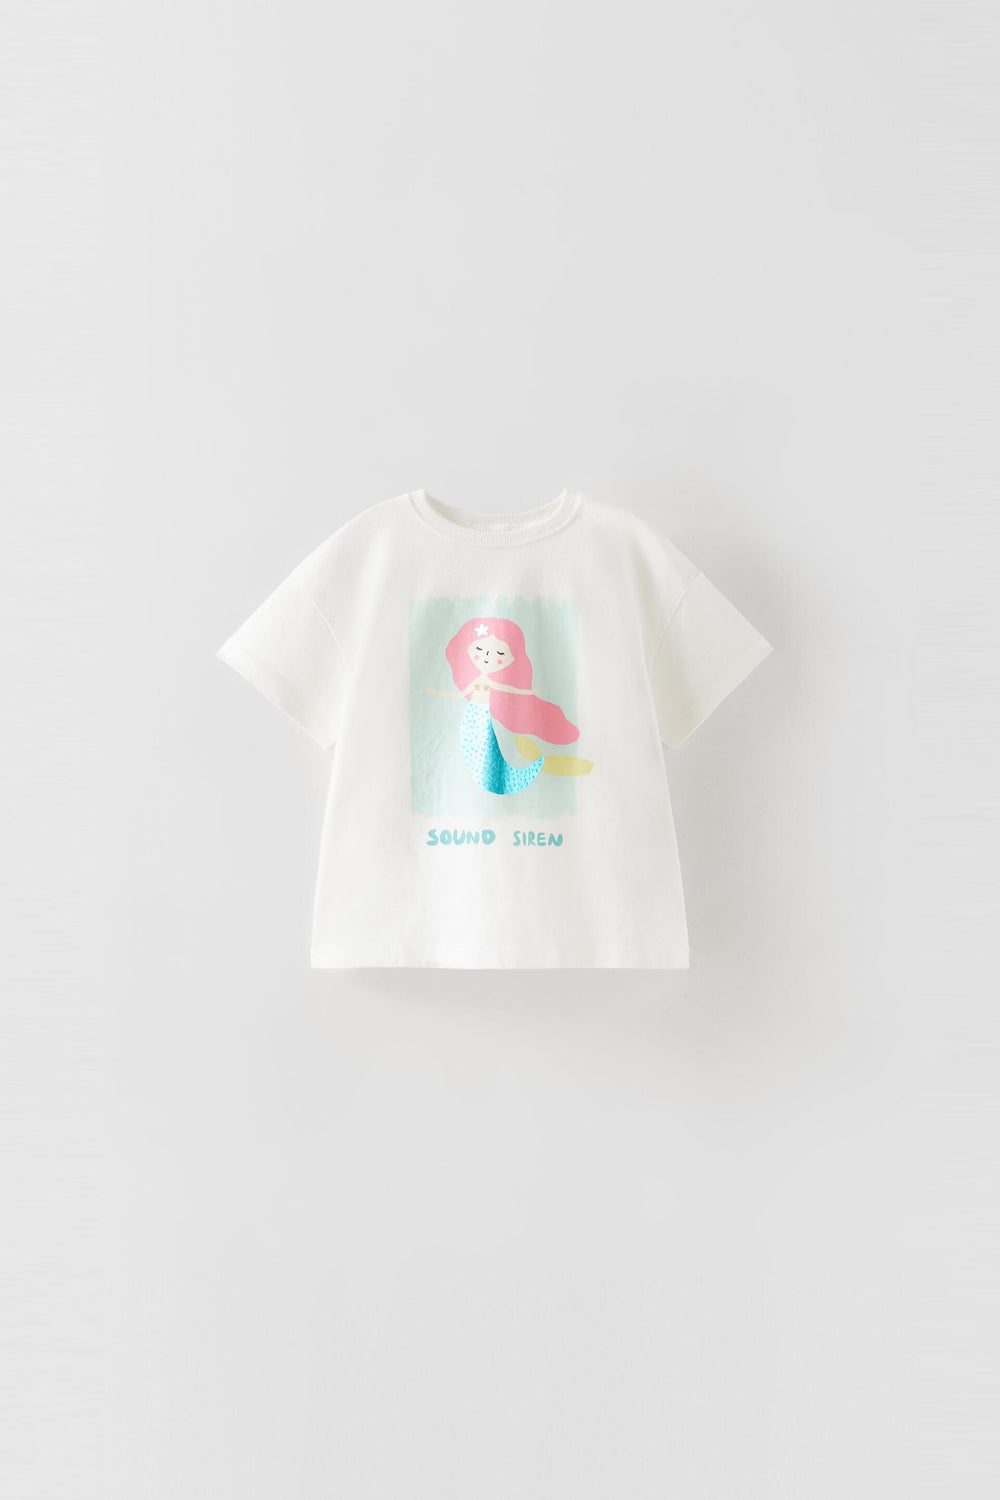 T-Shirt Bebe marque_Zara, genre_Fille, Enfant Moudda Tunisie2